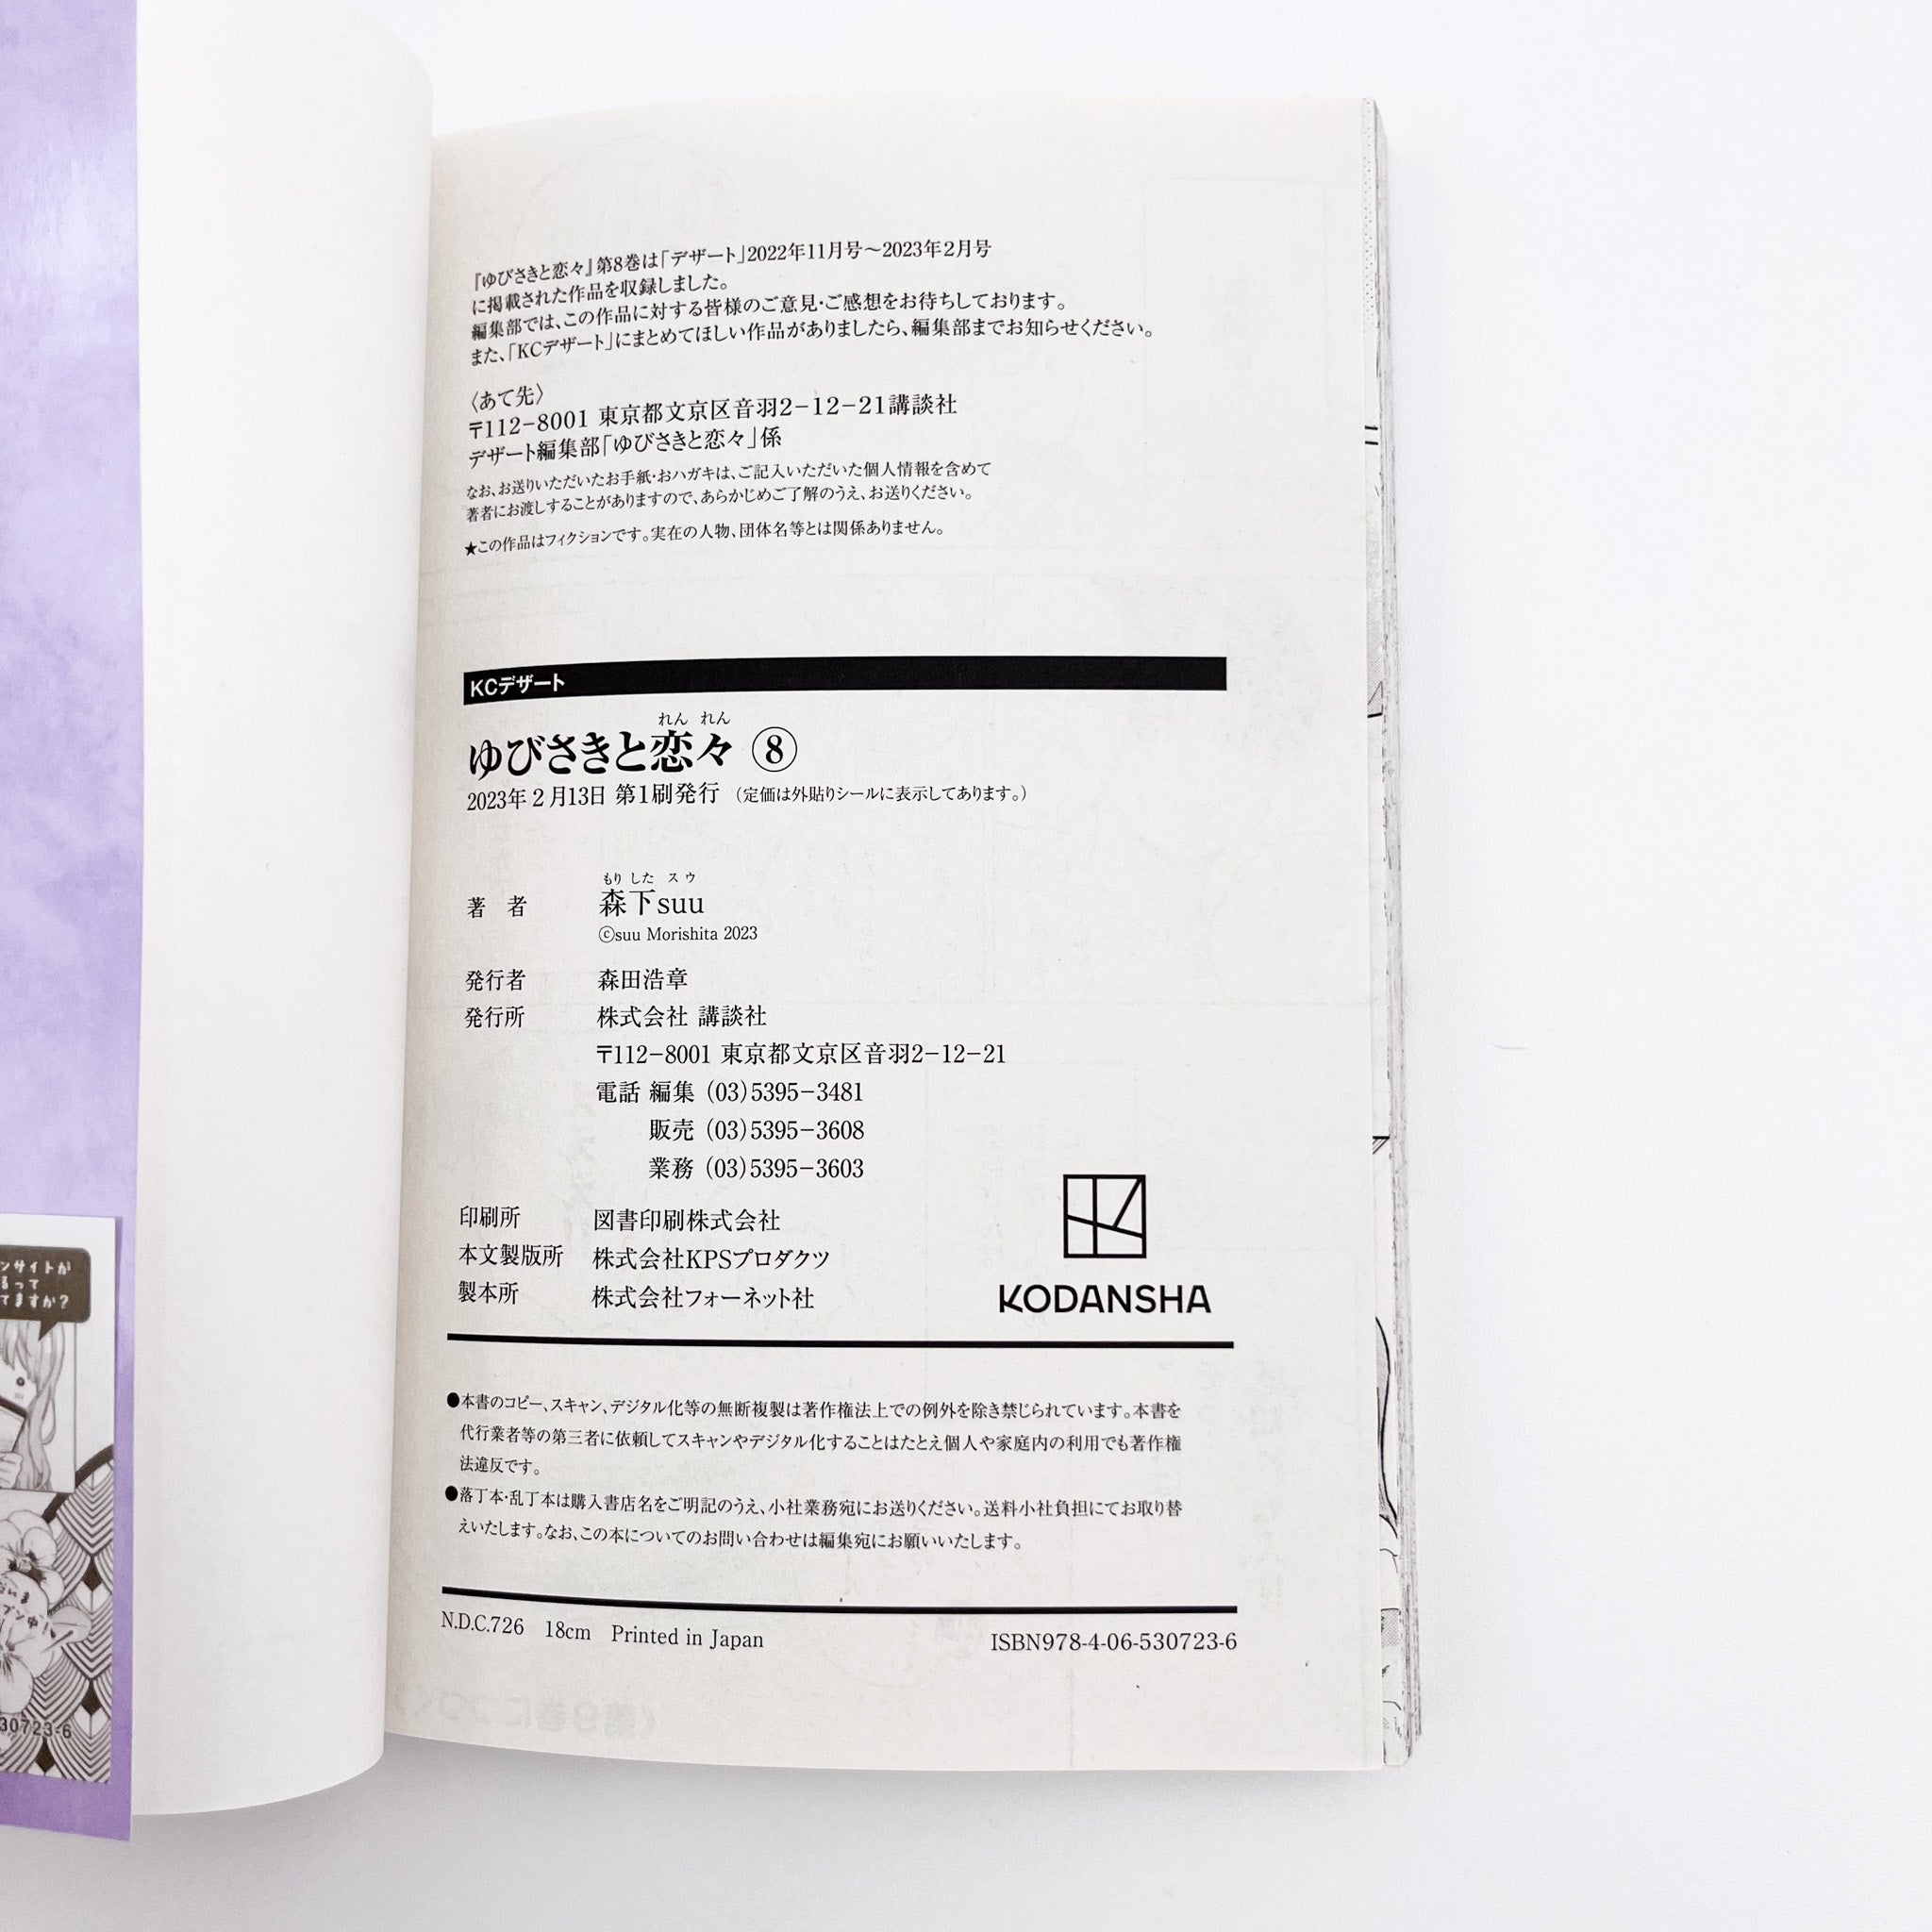 Yubisaki to Renren, Volume 8 information page